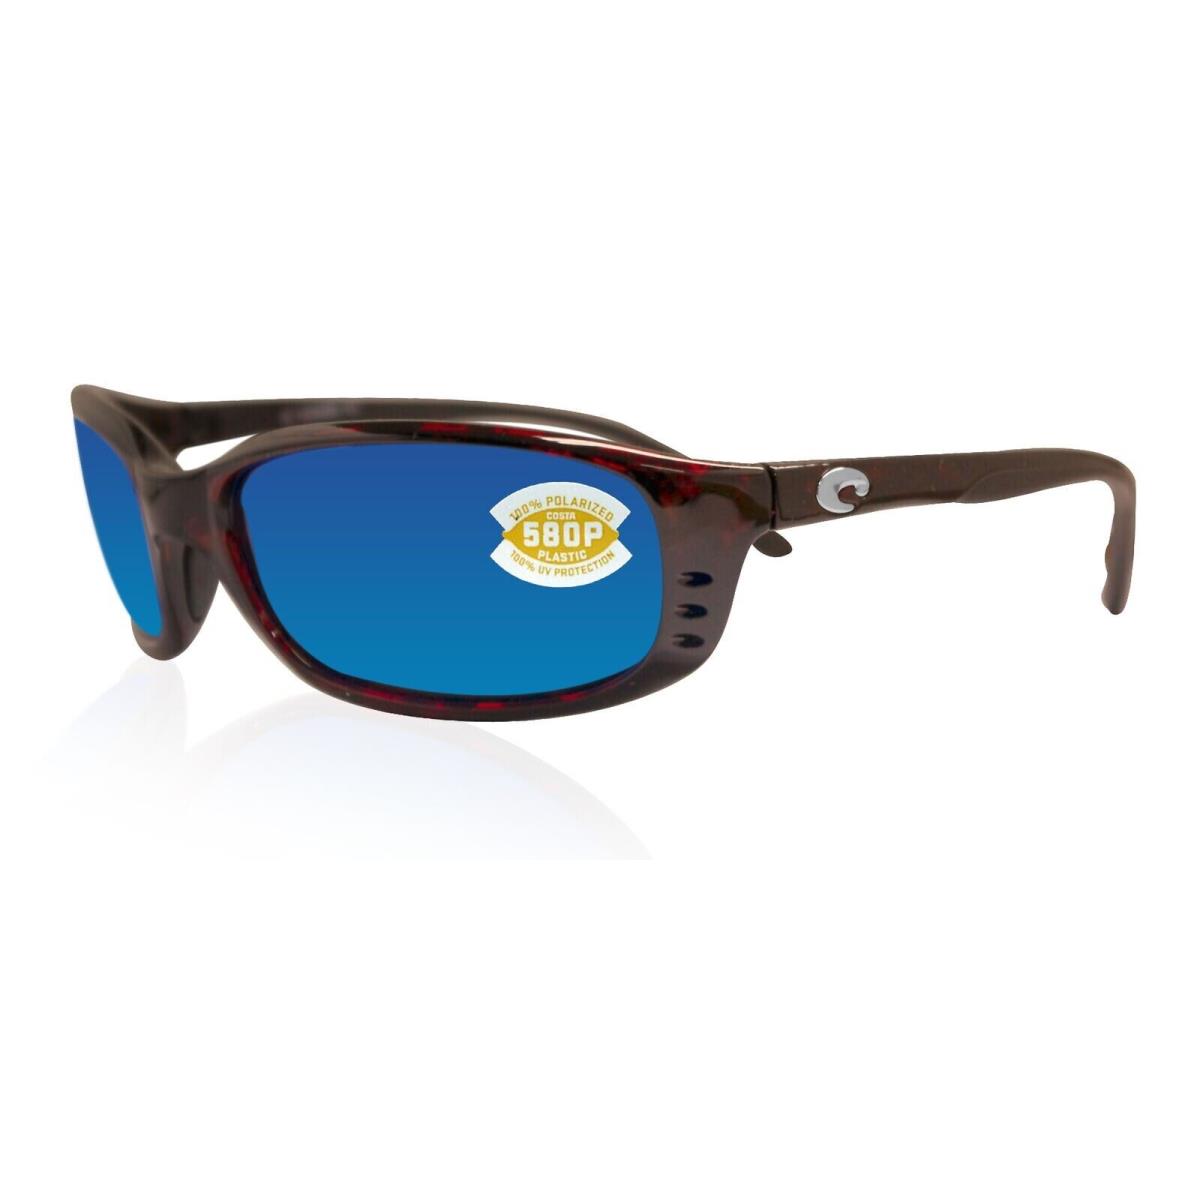 Costa Del Mar Brine Blue Mirror Polarized 580P Wrap 58.8mm Sunglasses BR 10 Obmp - Frame: Tortoise, Lens: Blue Mirror